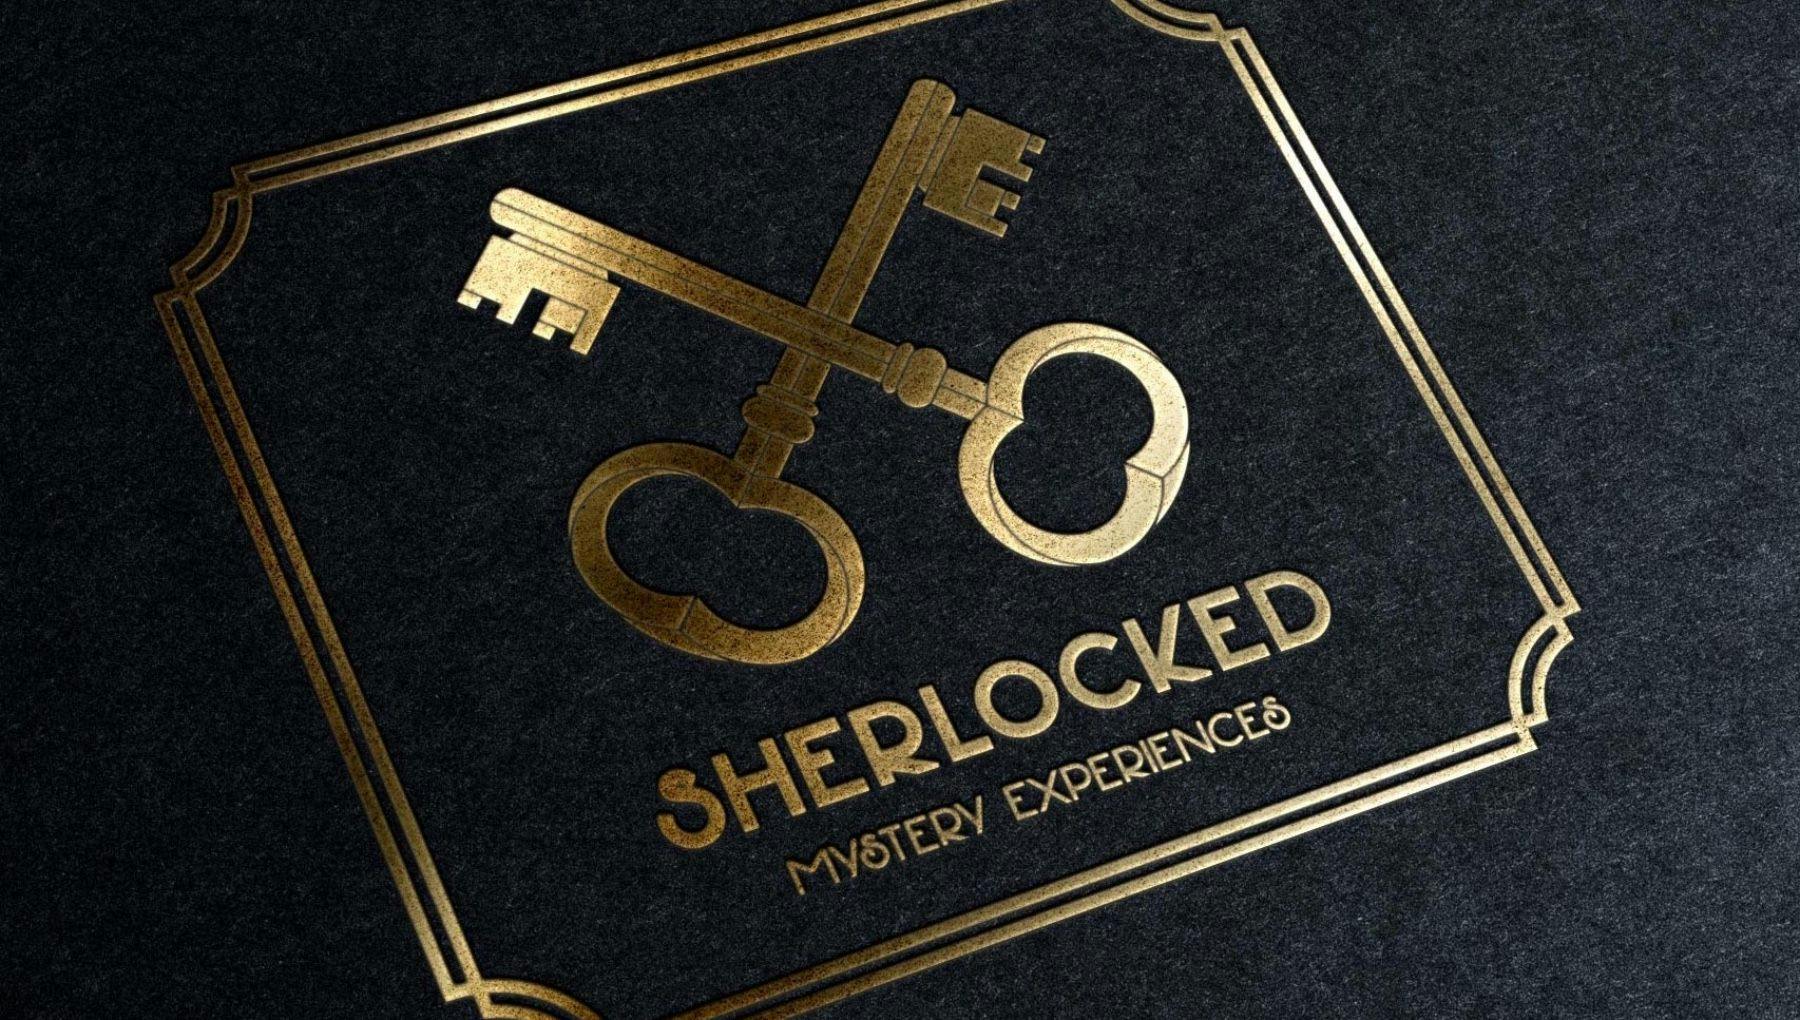 Sherlocked escape room logo